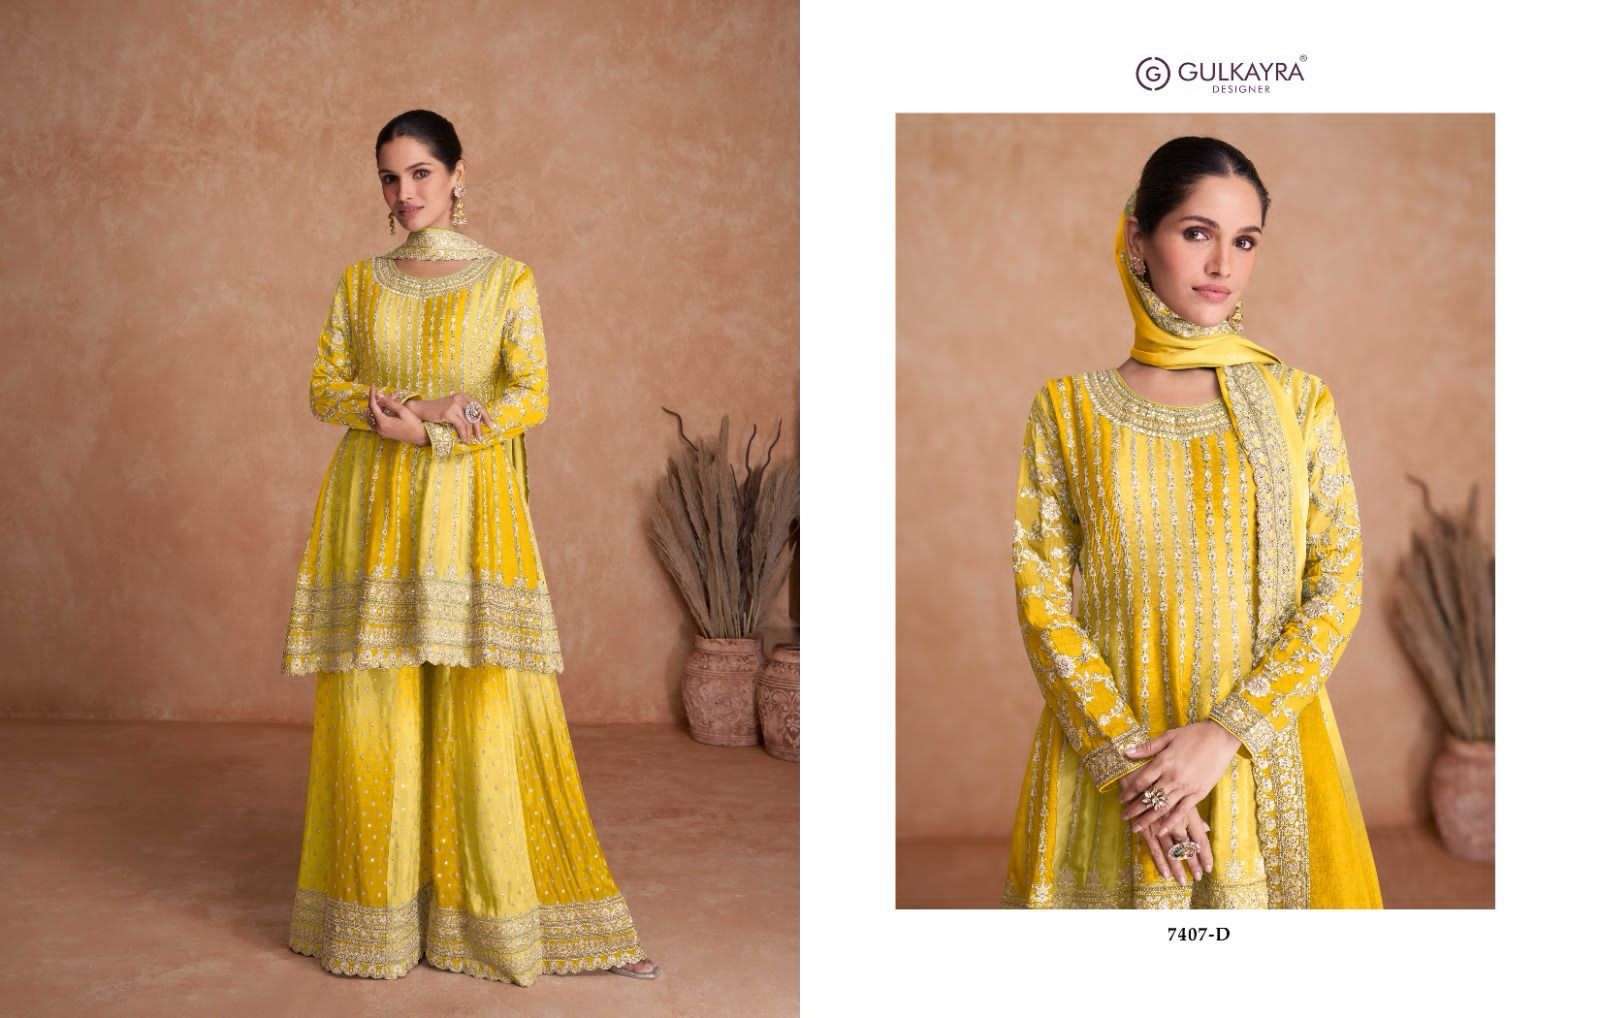 gulkayra vaani vol-2 7407 colour series designer wedding wear salwar kameez wholesaler surat gujarat